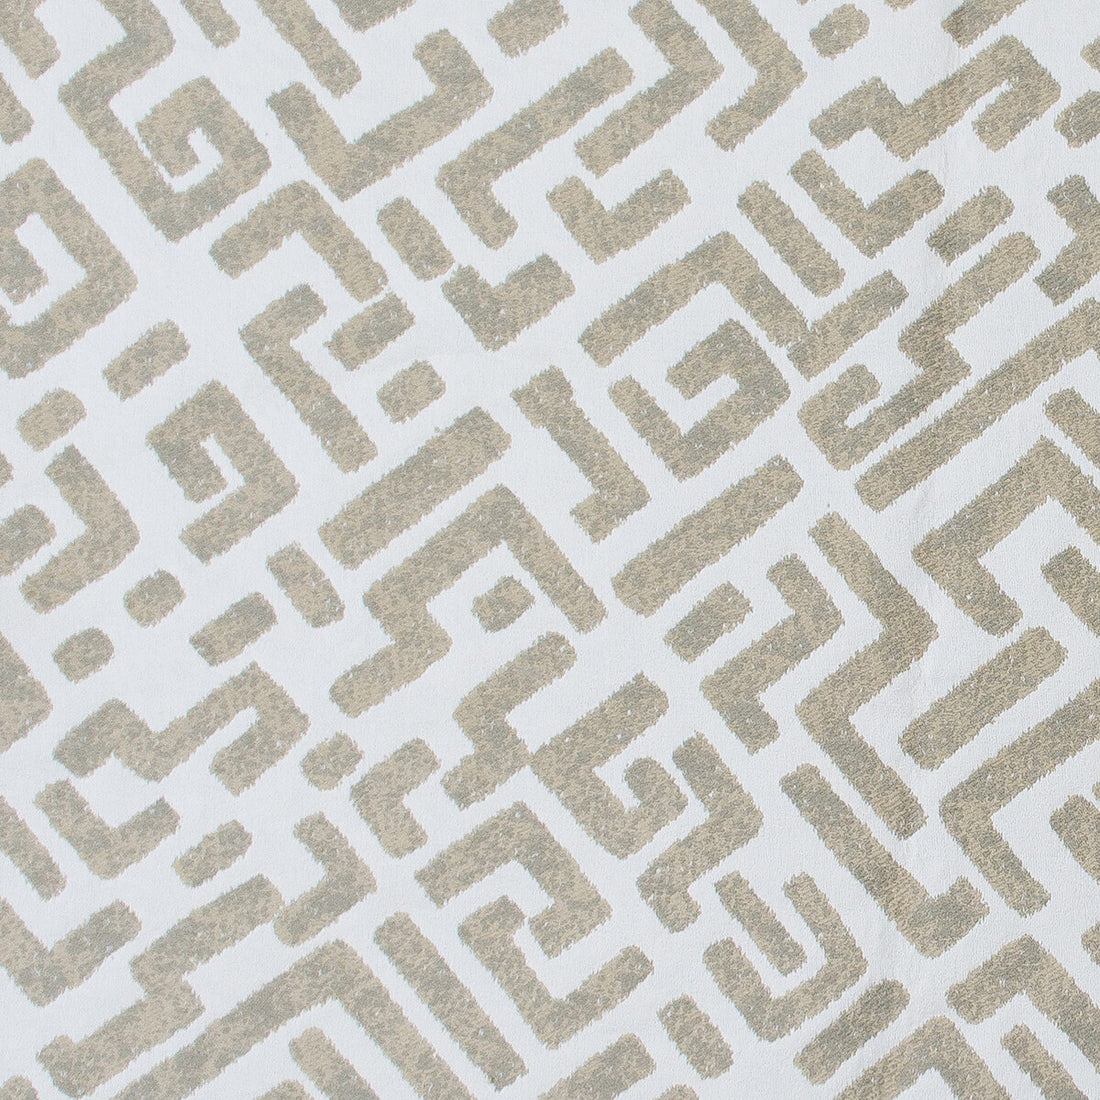 Escritura fabric in lino/blanco color - pattern GDT5586.001.0 - by Gaston y Daniela in the Gaston Nuevo Mundo collection